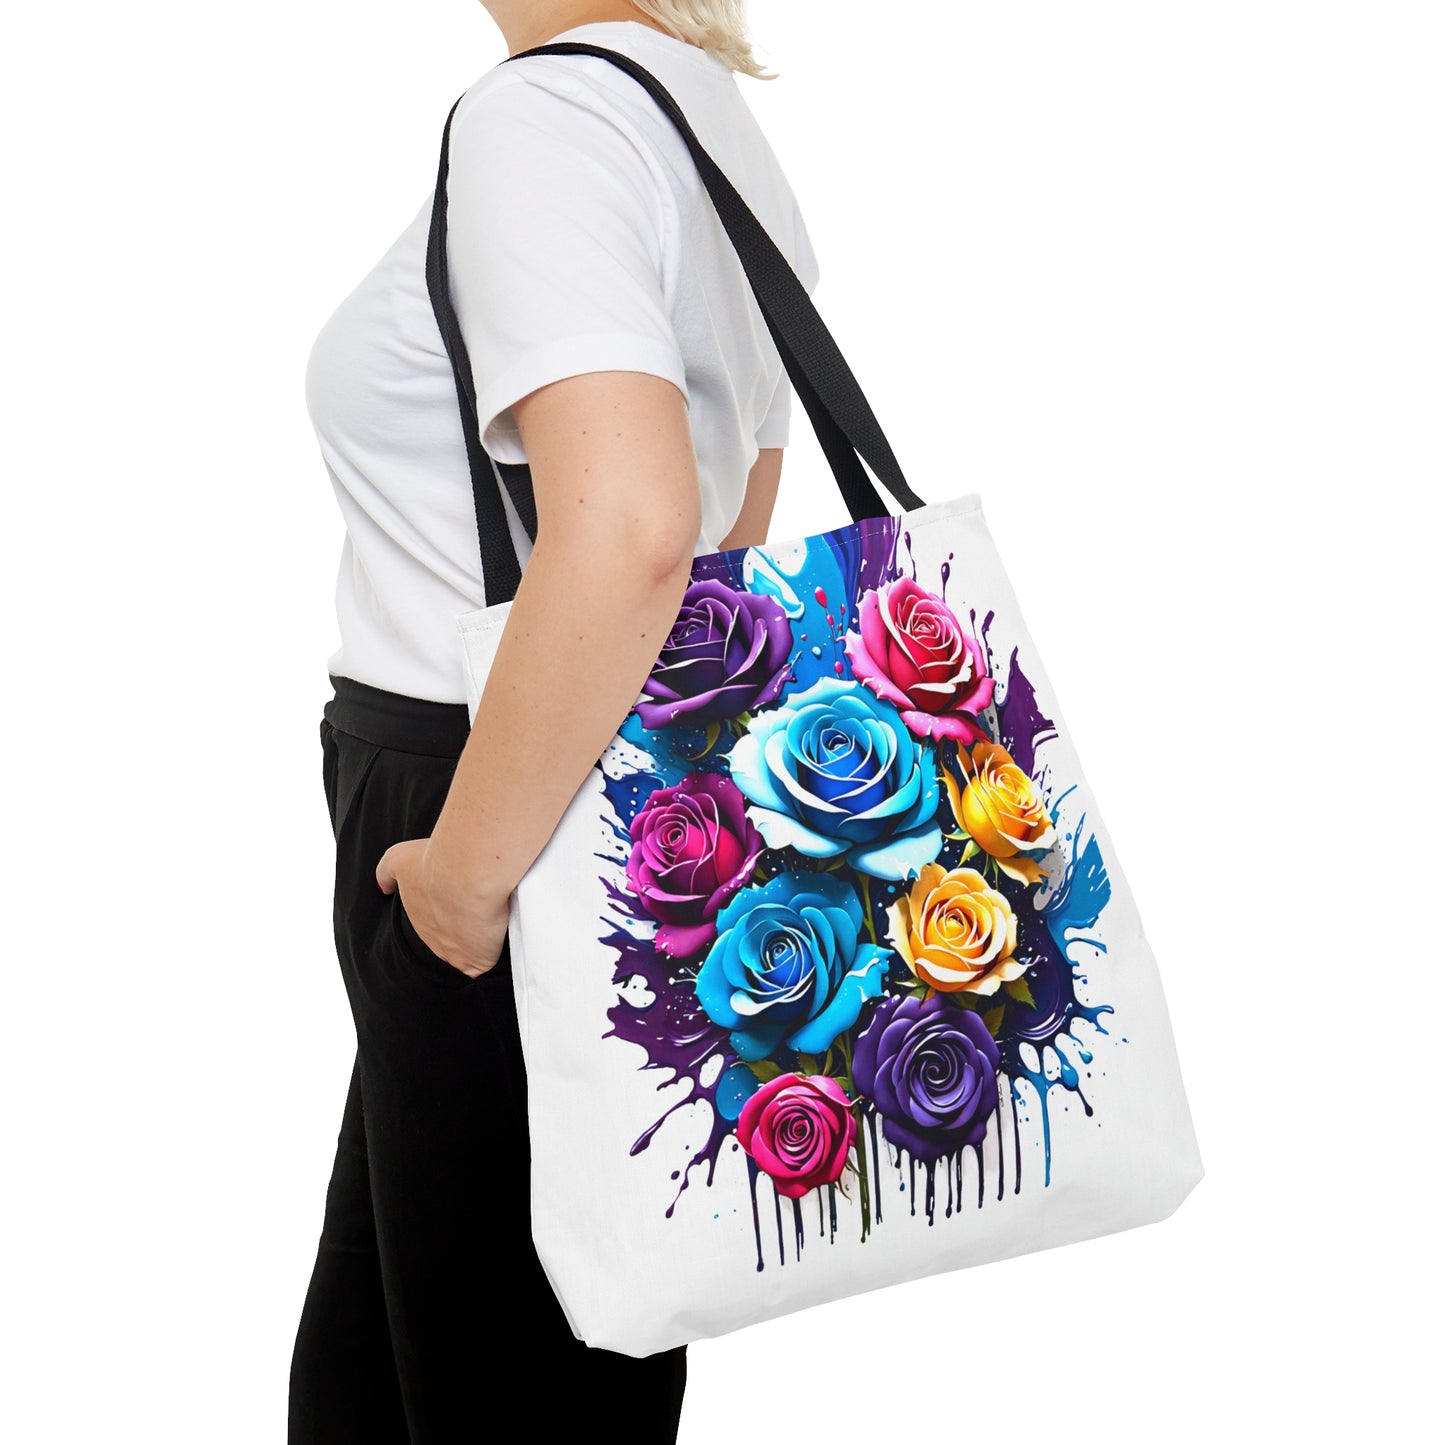 A Splash of Color Lovely Roses Tote Bag